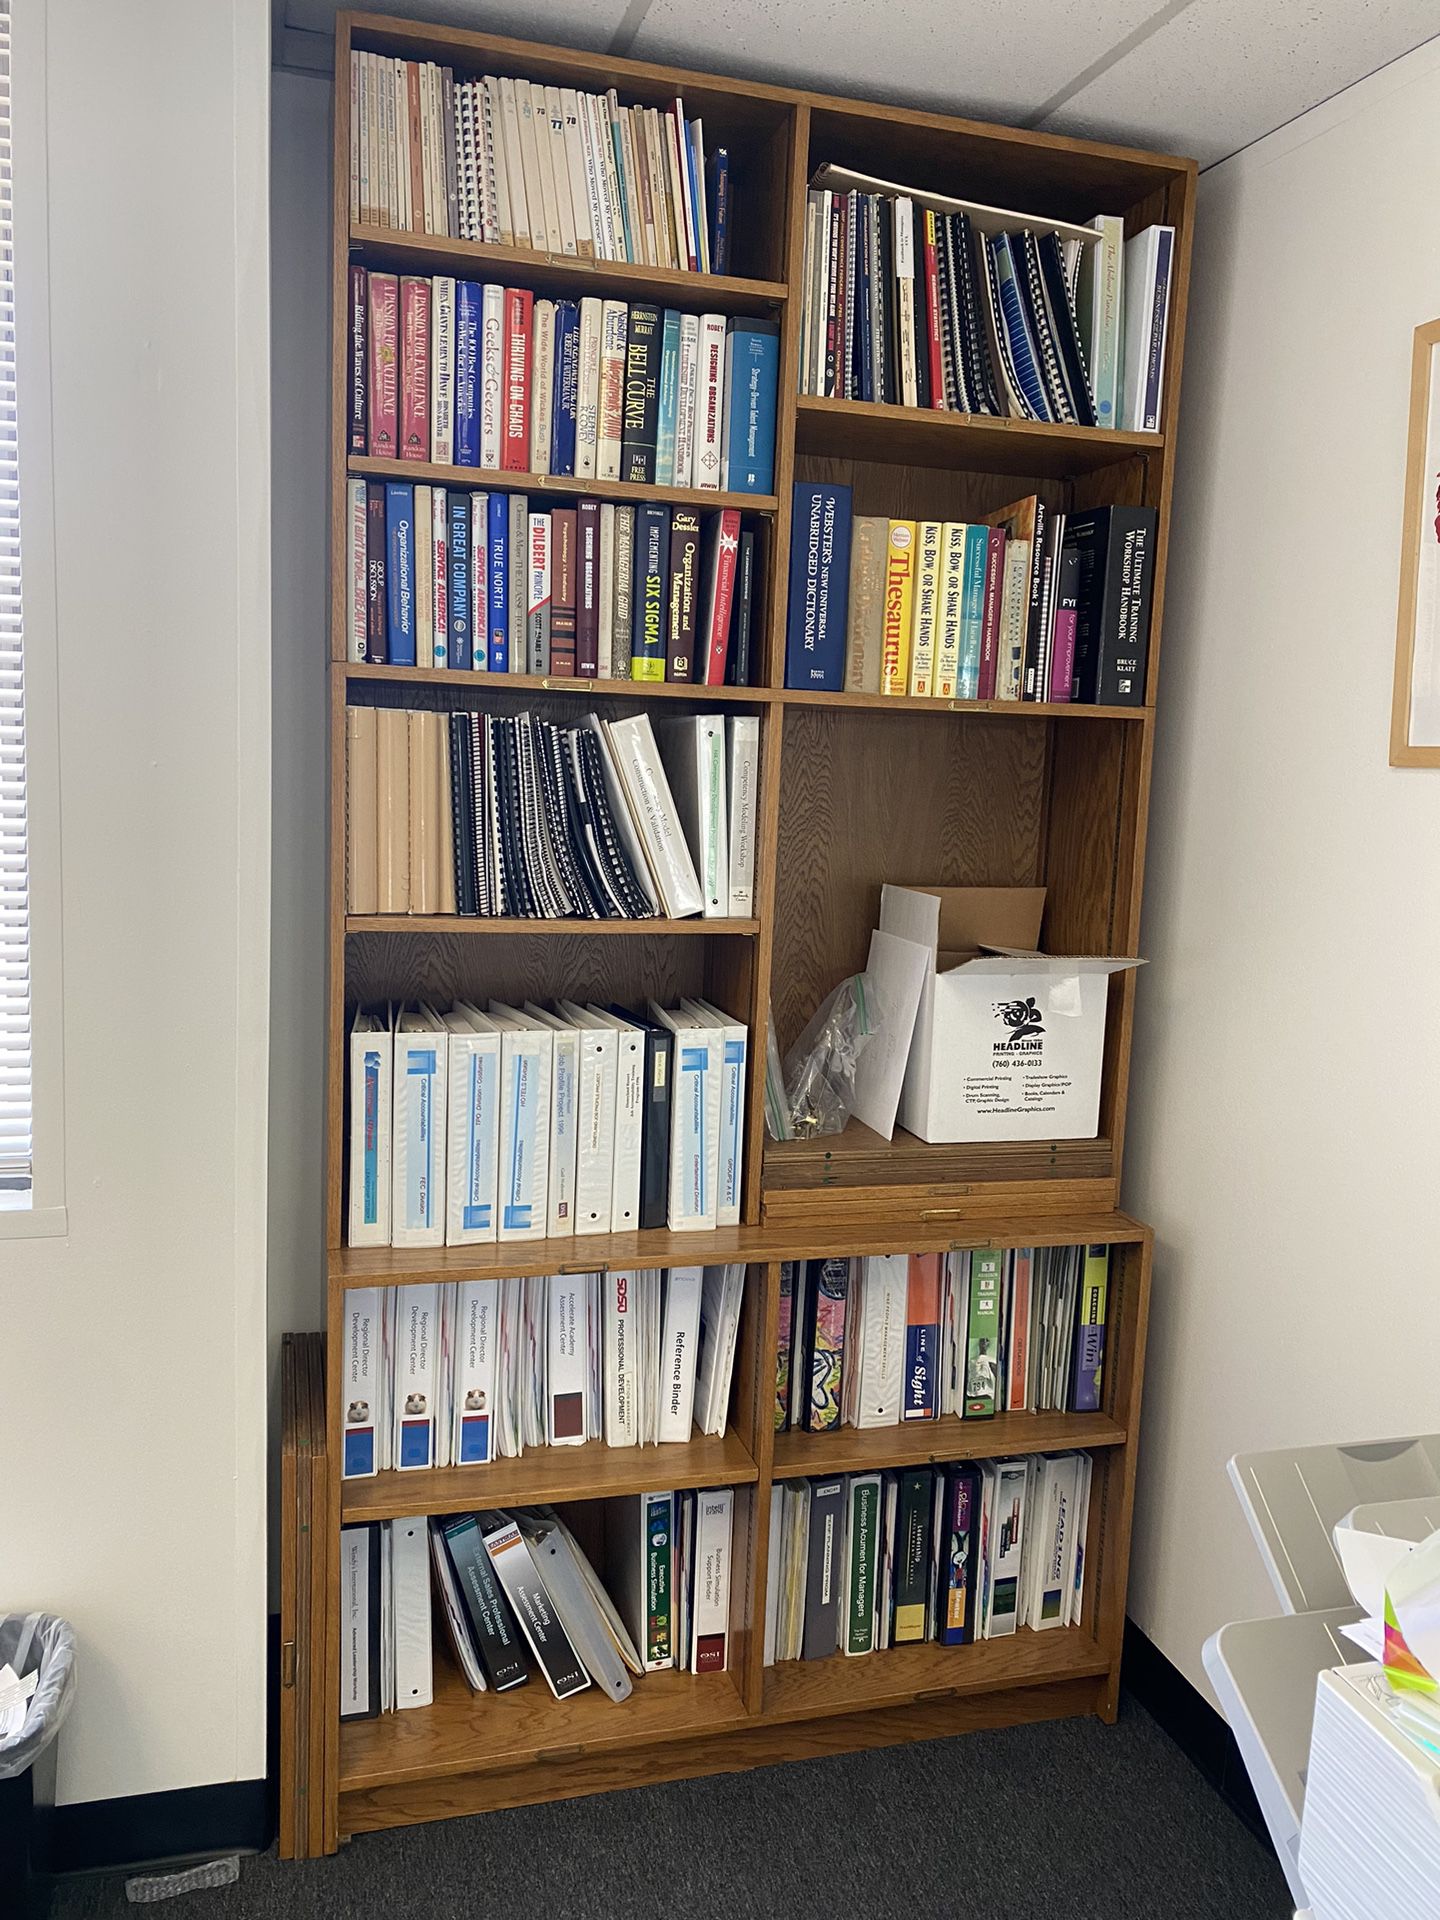 Bookshelf with adjustable shelves